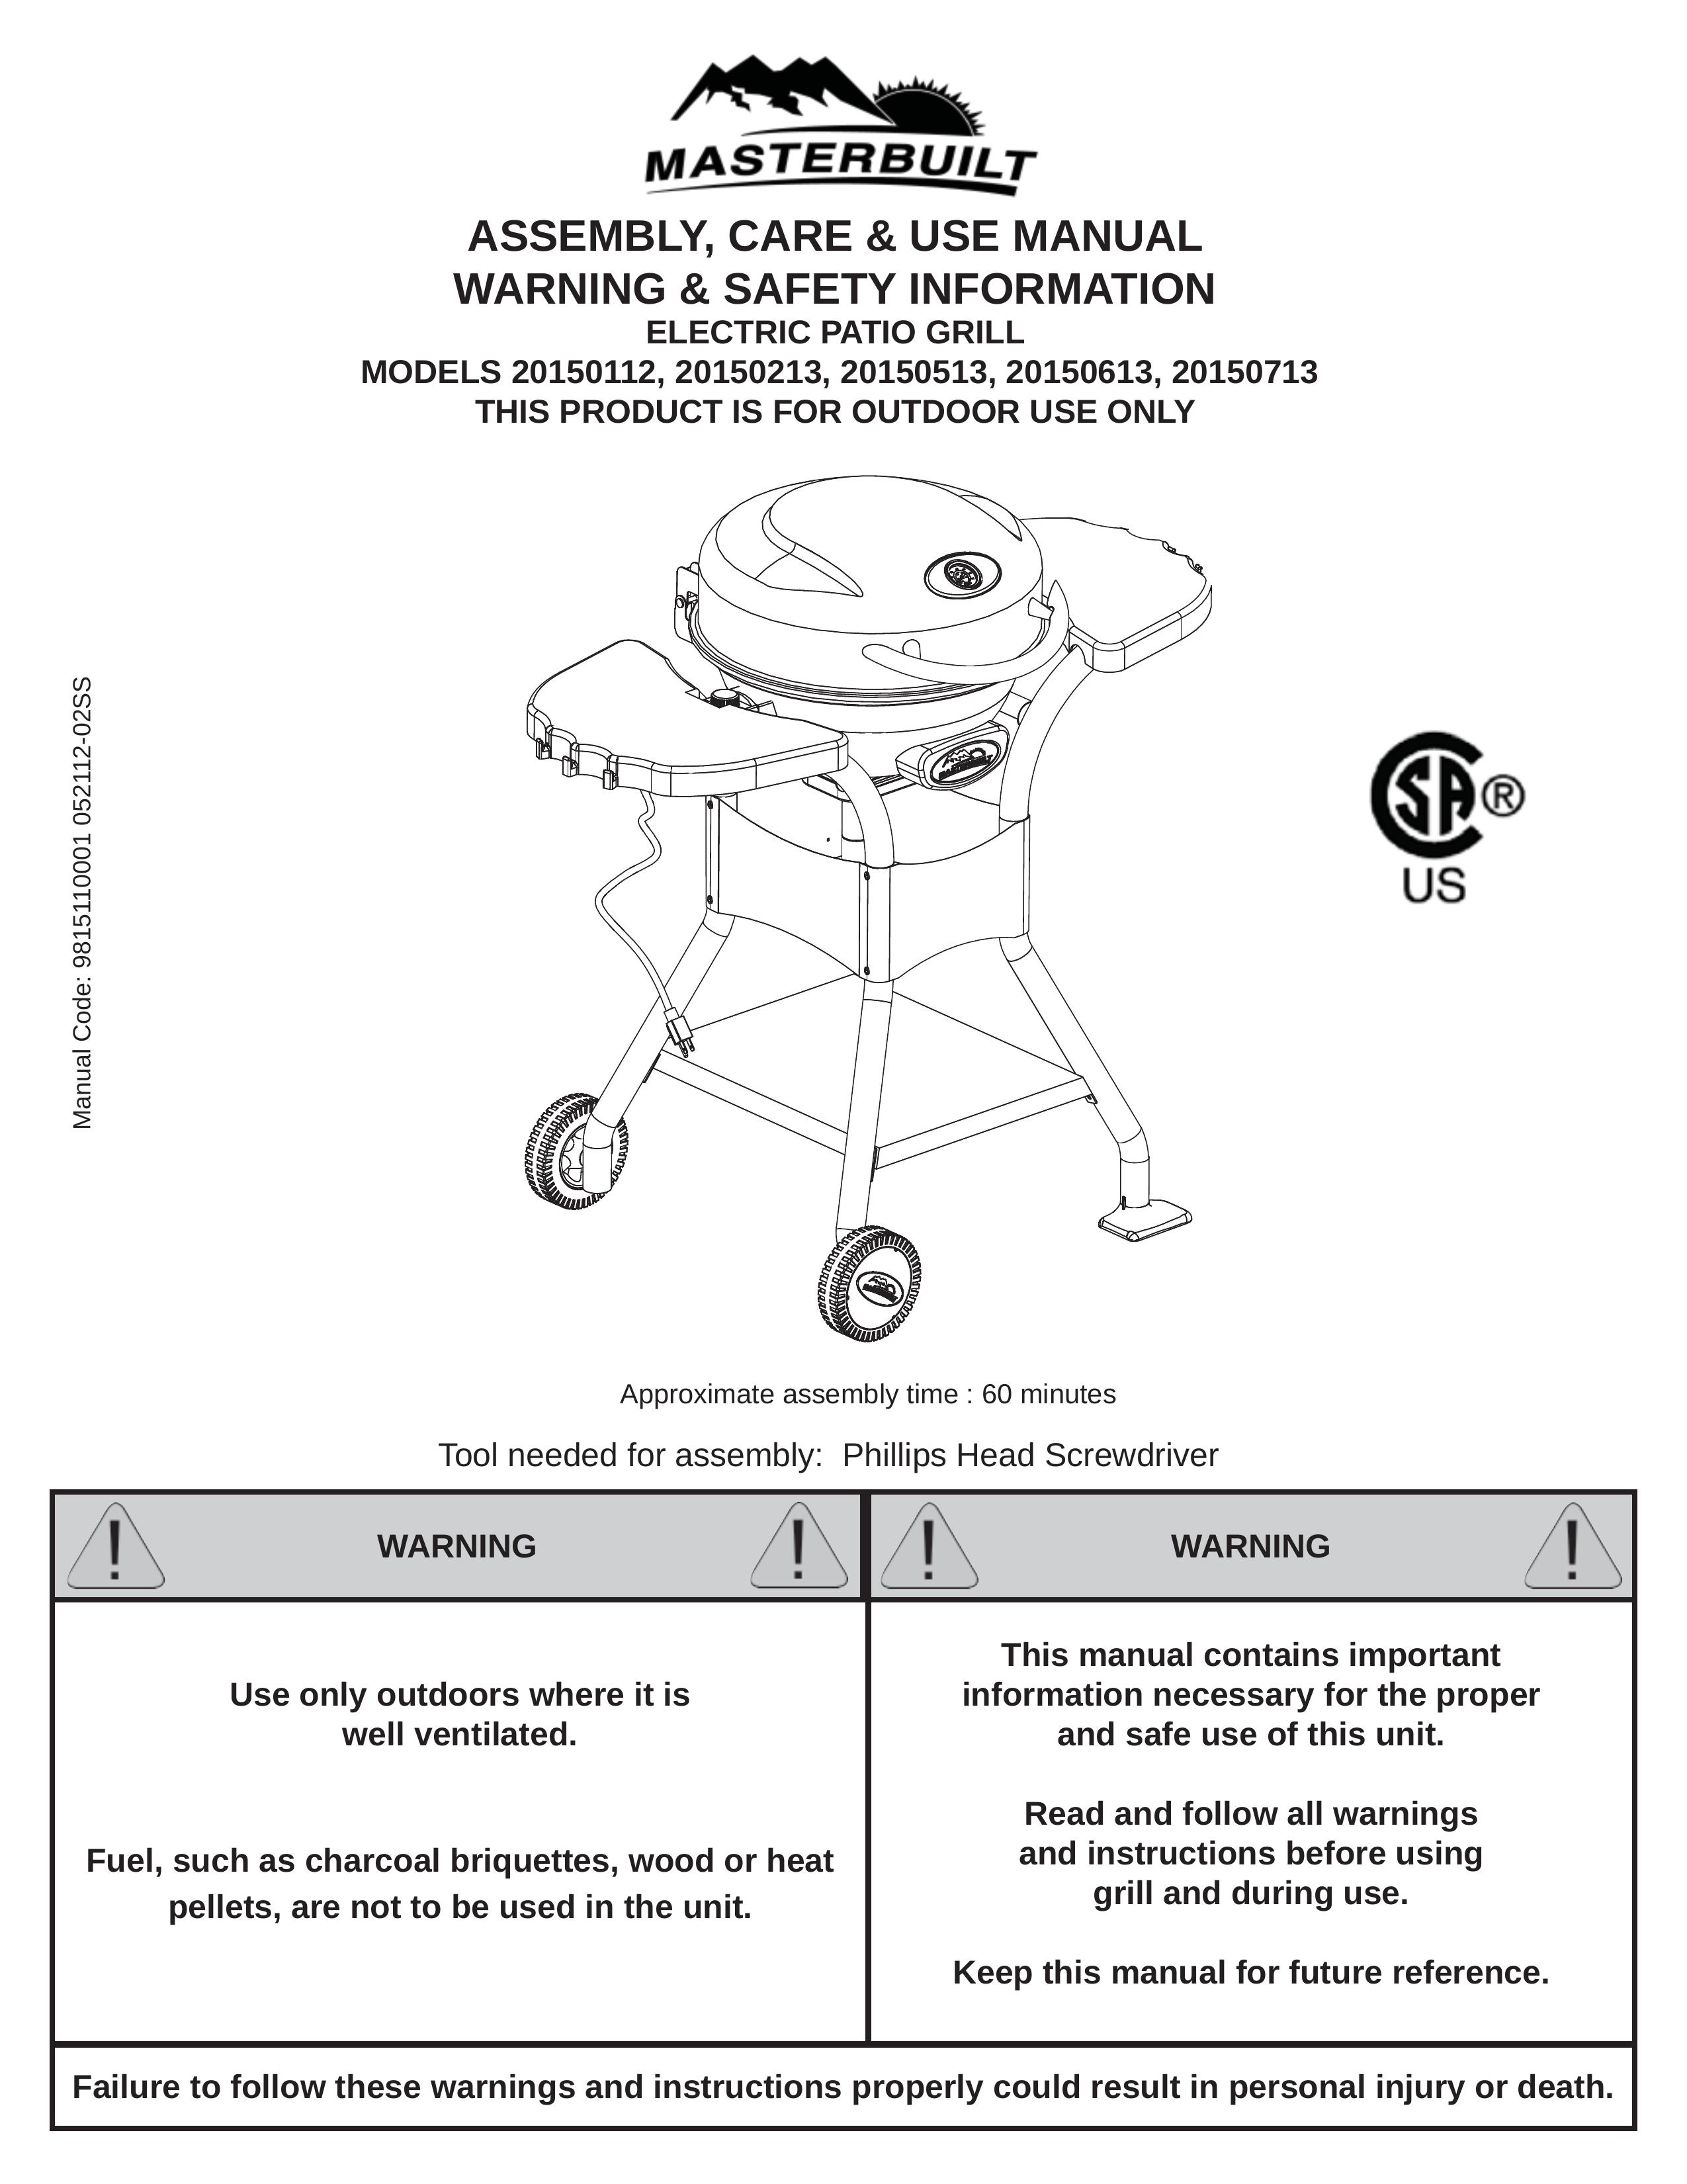 Master Bilt 20150713 Electric Grill User Manual